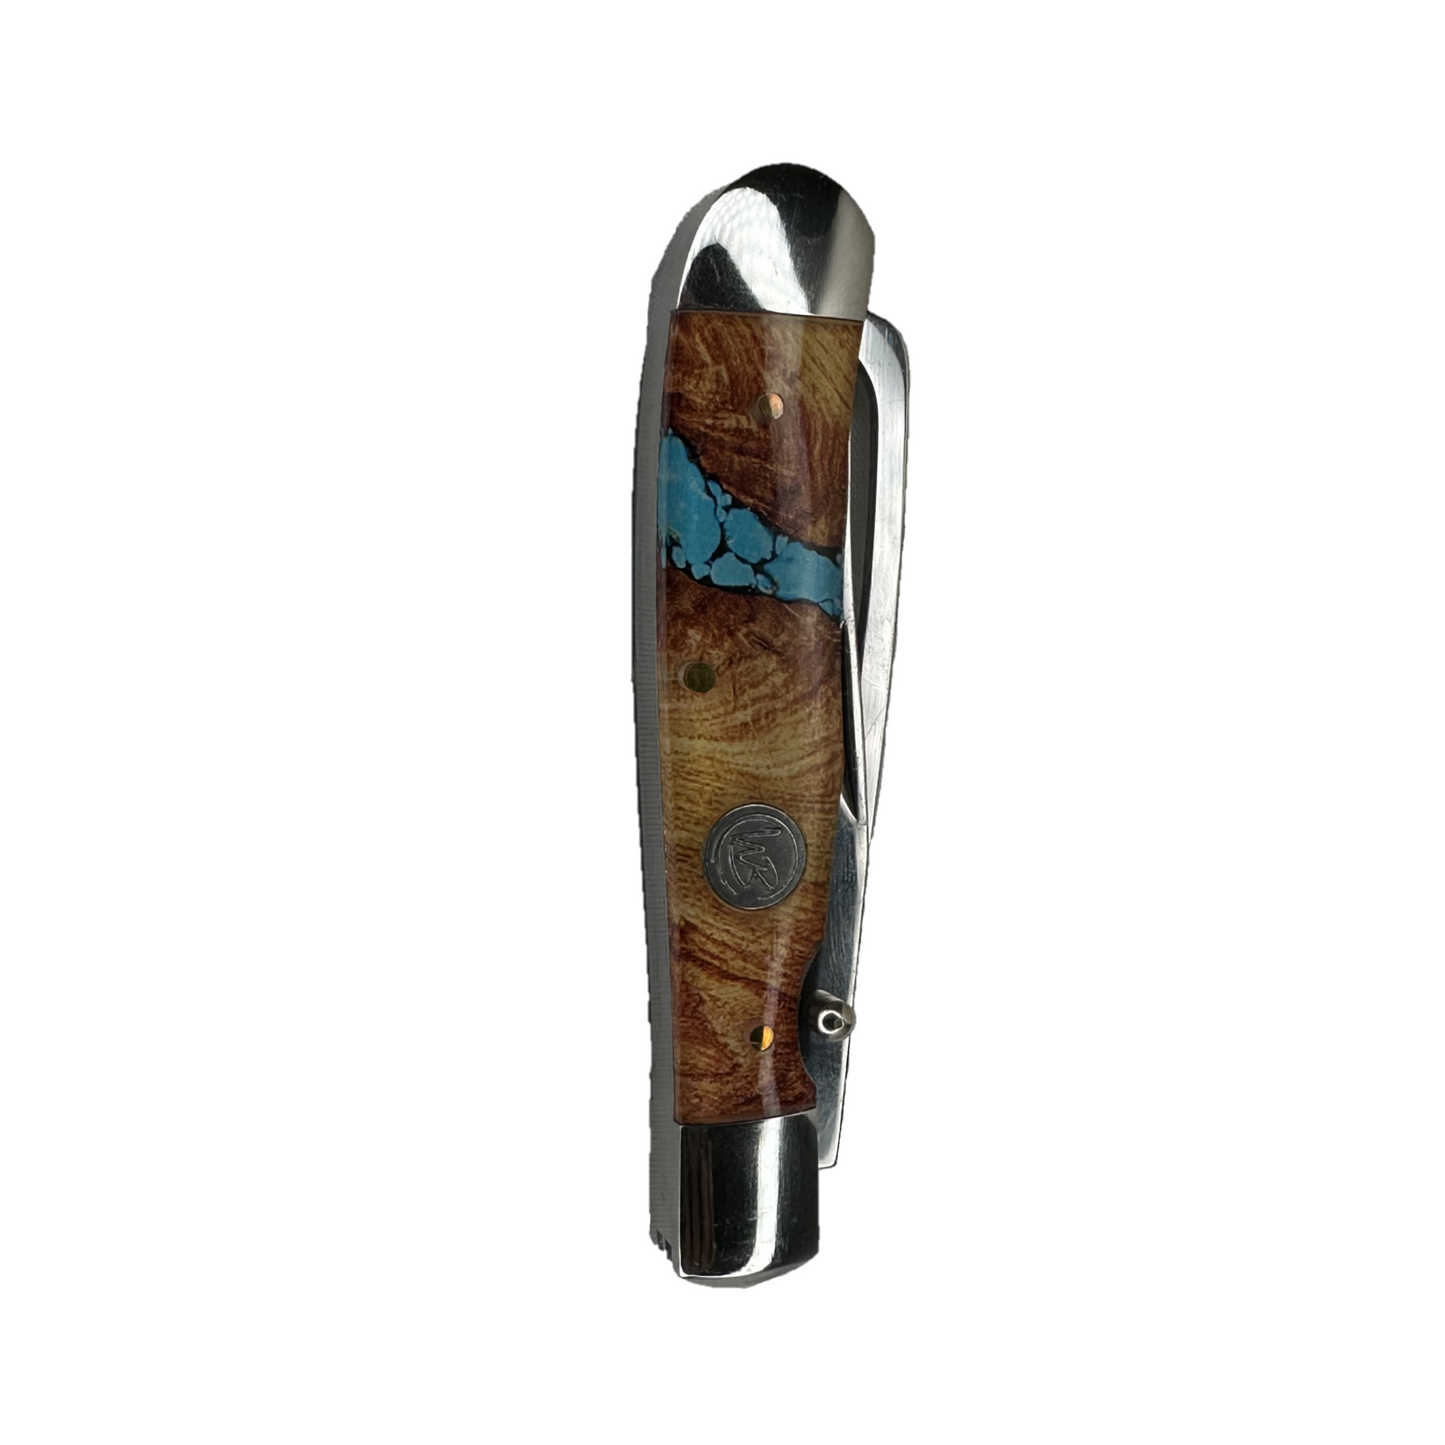 Whiskey Bent Turquoise River Single Clip Blade Hoofpick Pocket Knife WB19-14